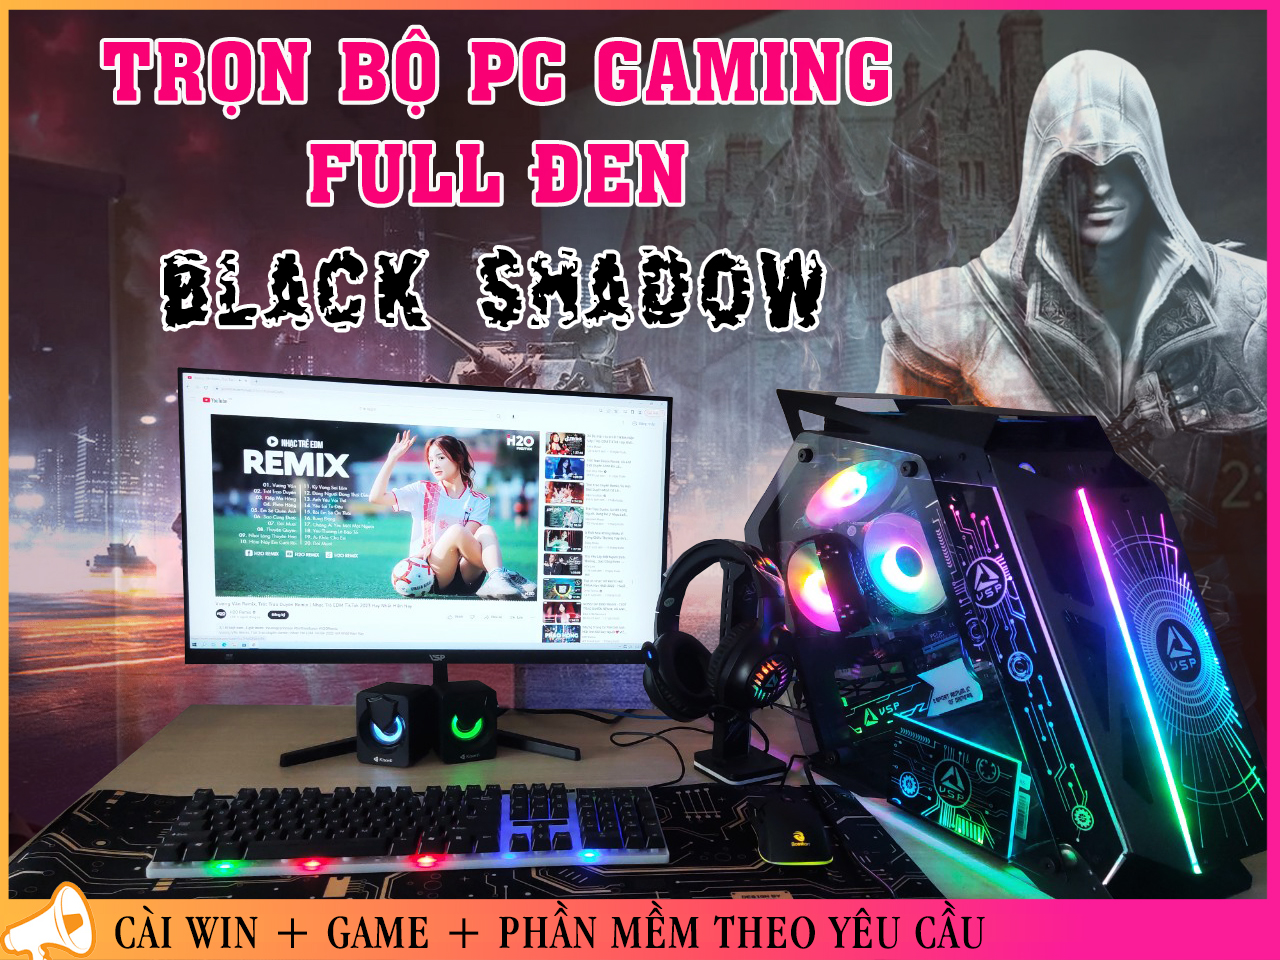 Full Bộ PC Gaming BLACK SHAD chiến mọi Game Online, GATA 5, Render Video, Photoshop